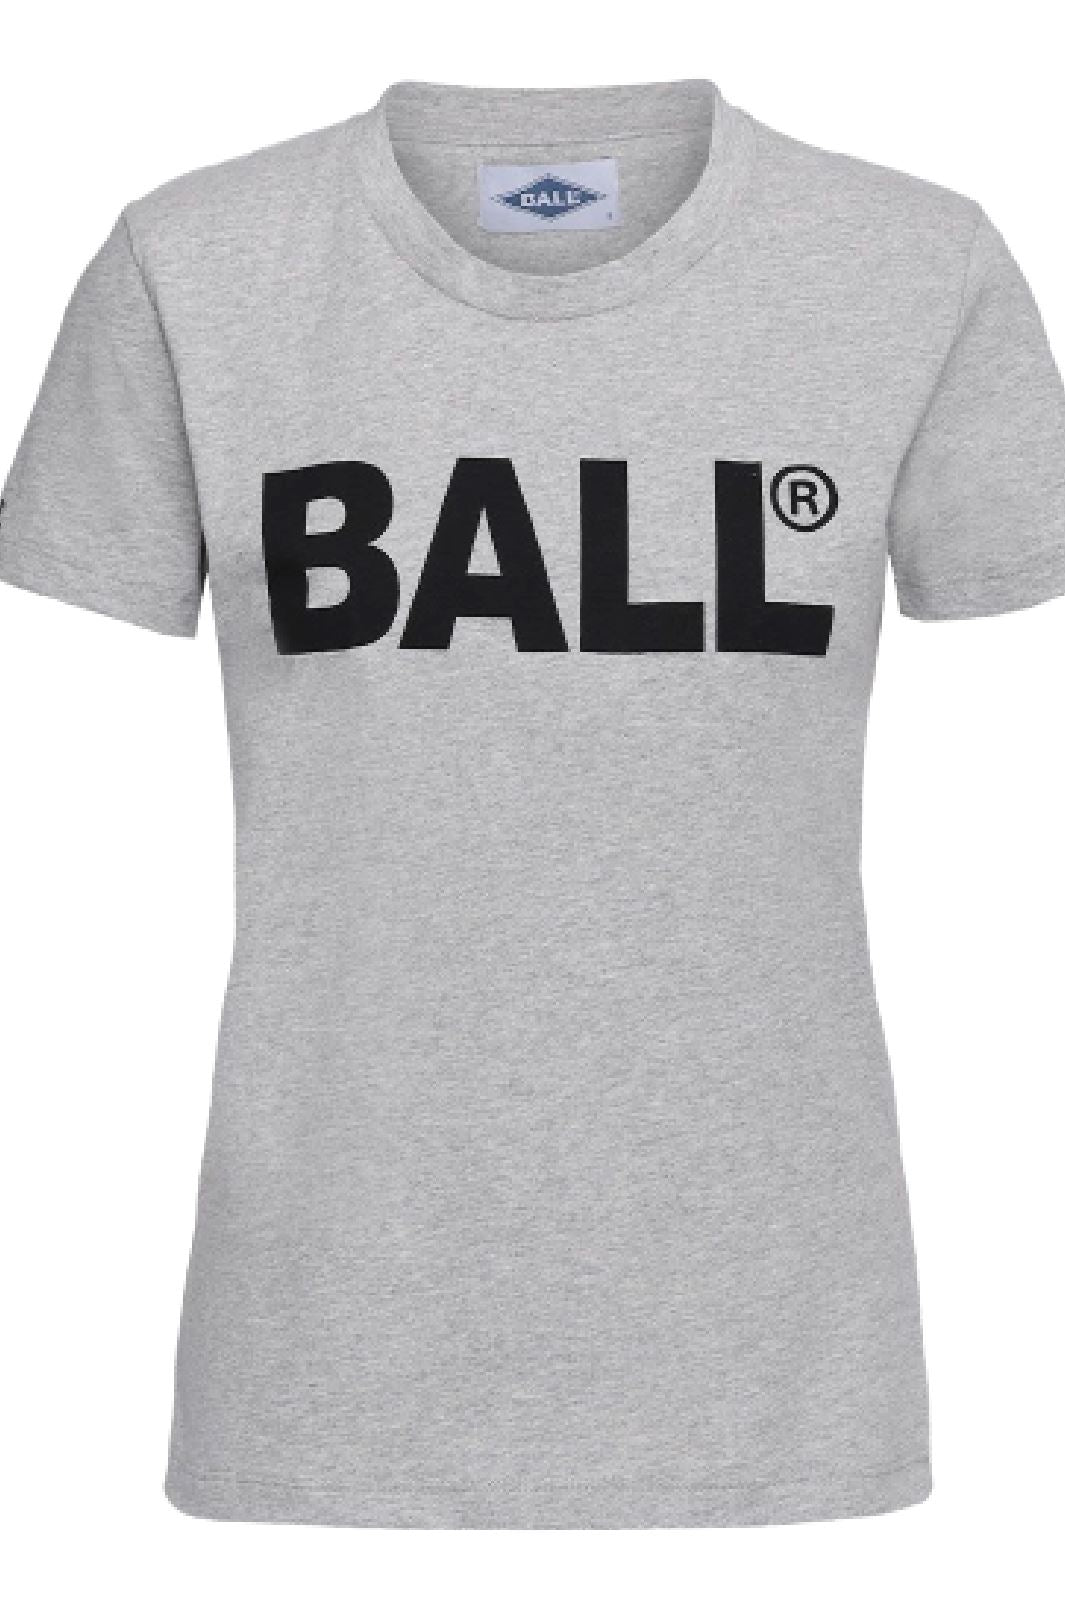 Ball - H Long Woman - Grey T-shirts 